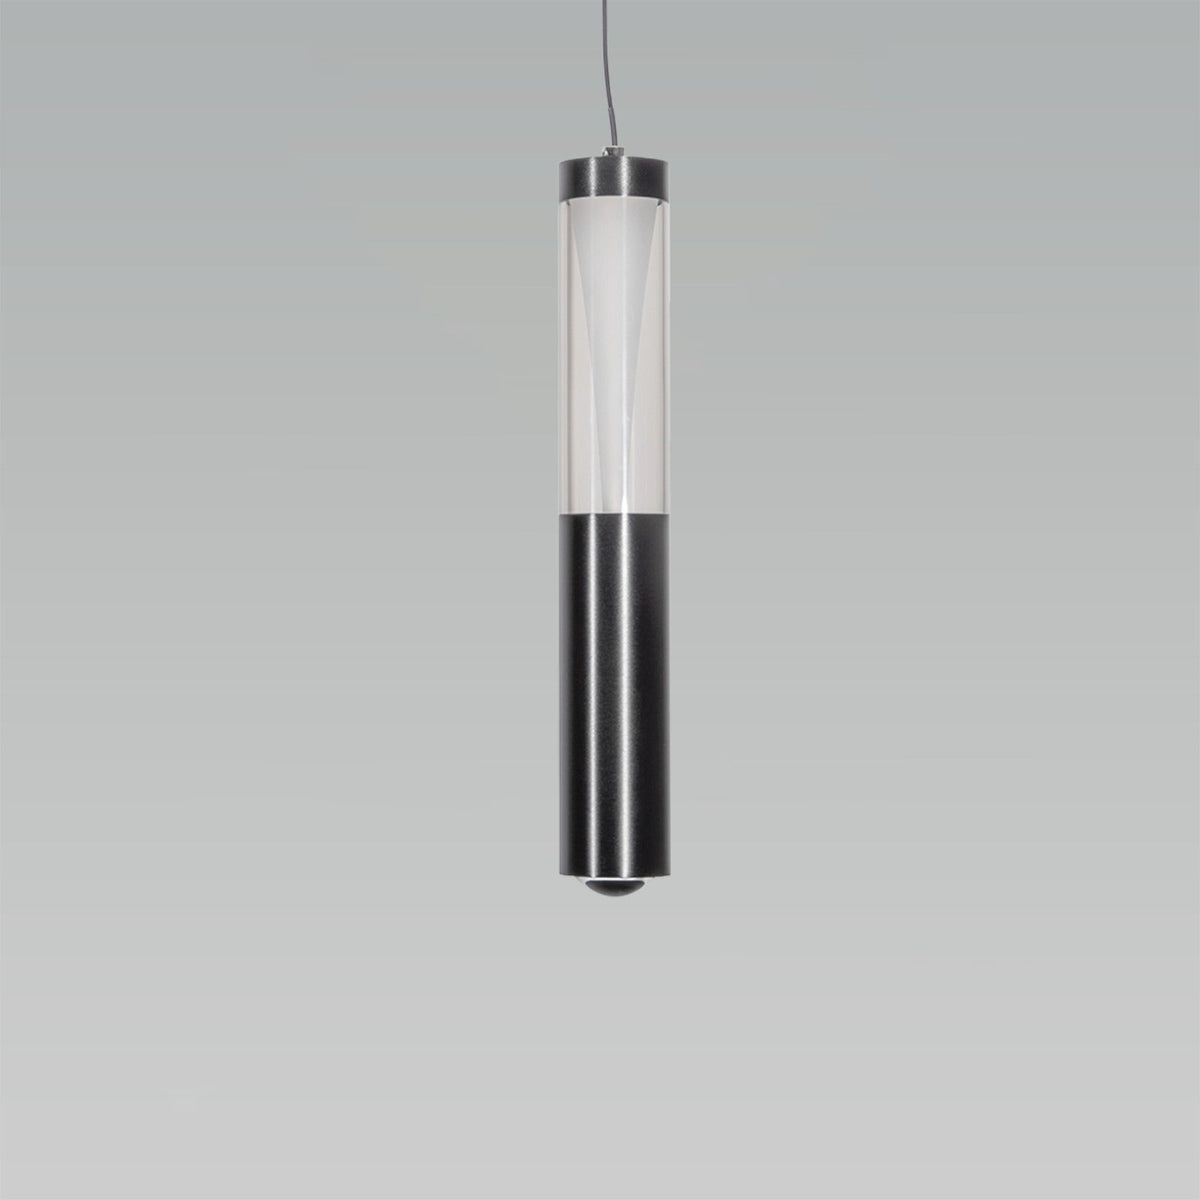 Buy Italian Touch Black LED Pendant Light Minimalistic